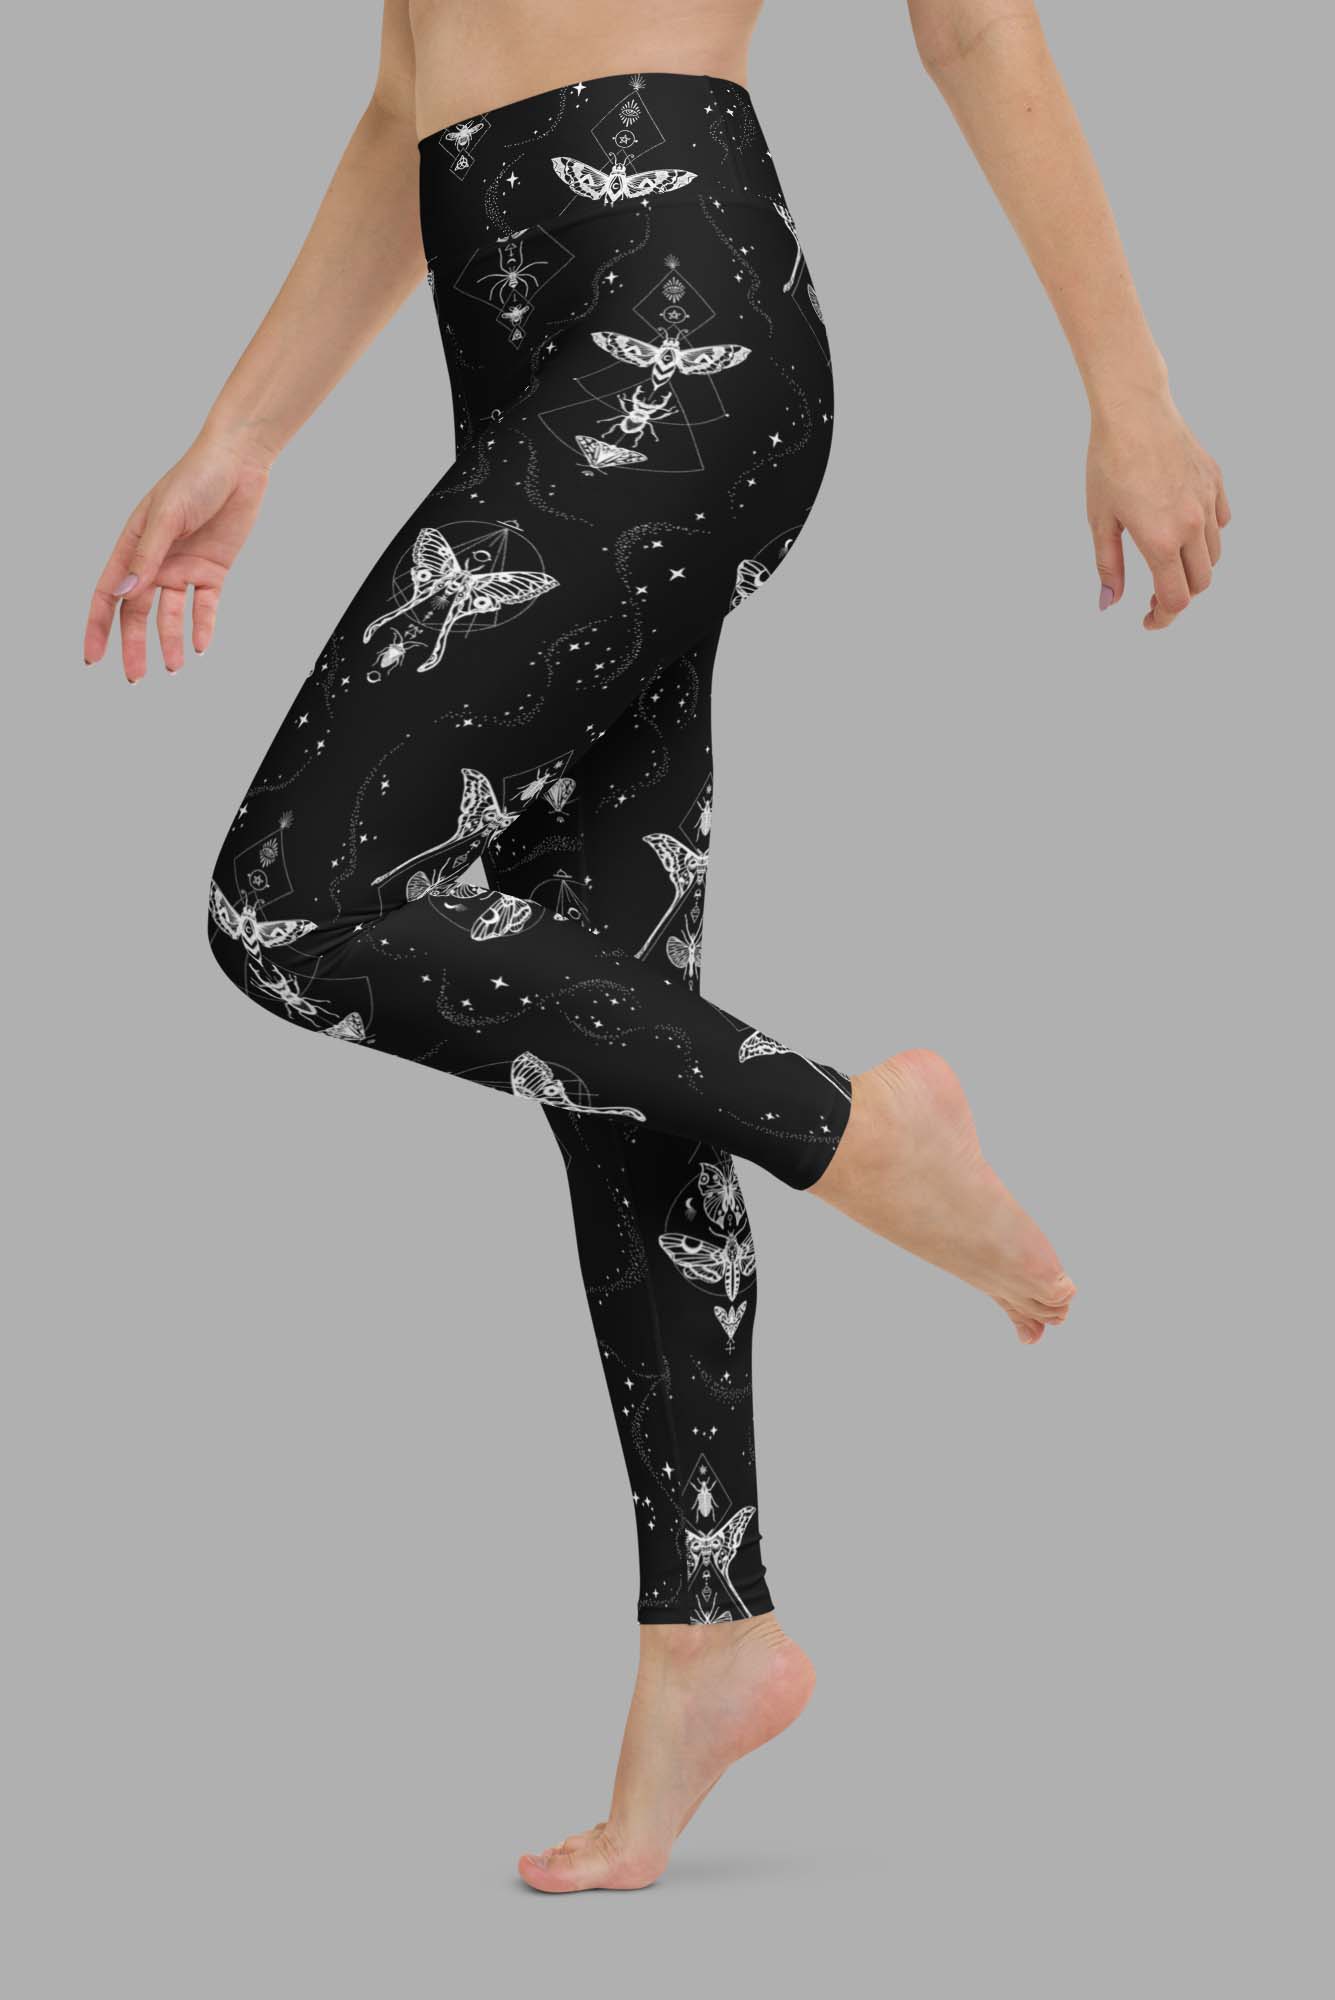 https://cosmicdrifters.com/wp-content/uploads/cosmic-drifters-entomon-print-one-piece-yoga-leggings-side.jpg